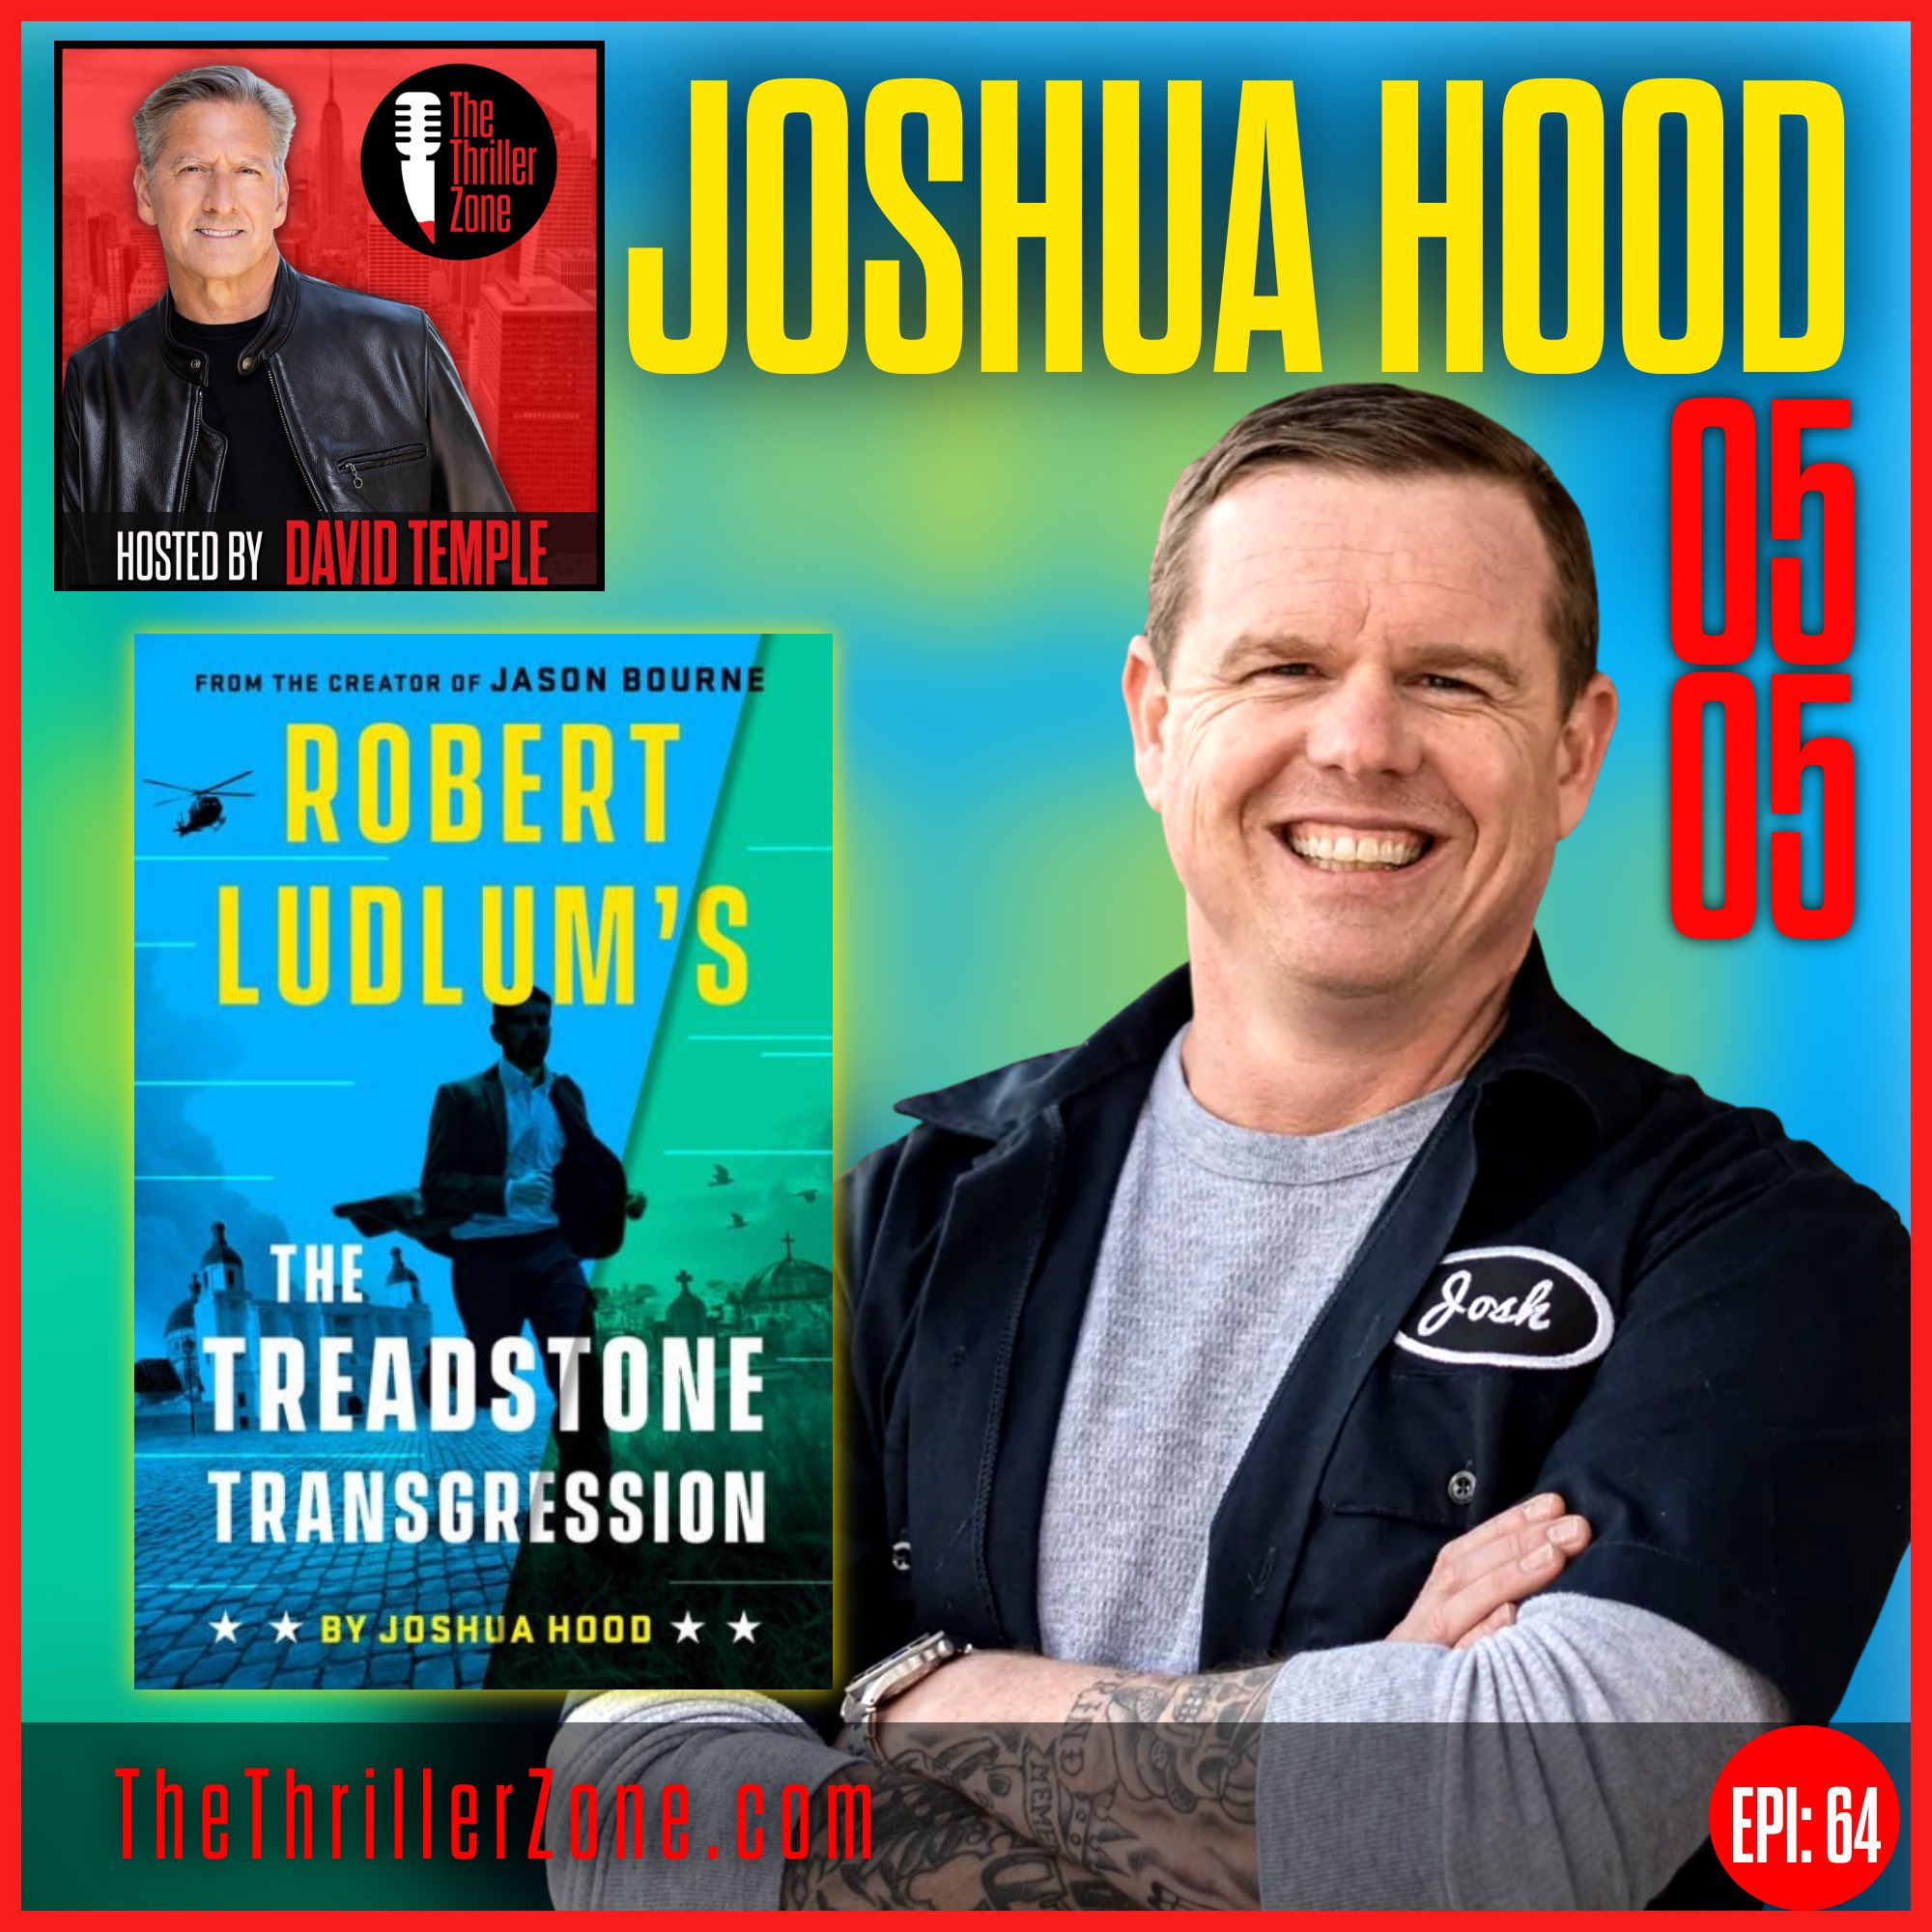 Joshua Hood, author of The Treadstone Transgression Image